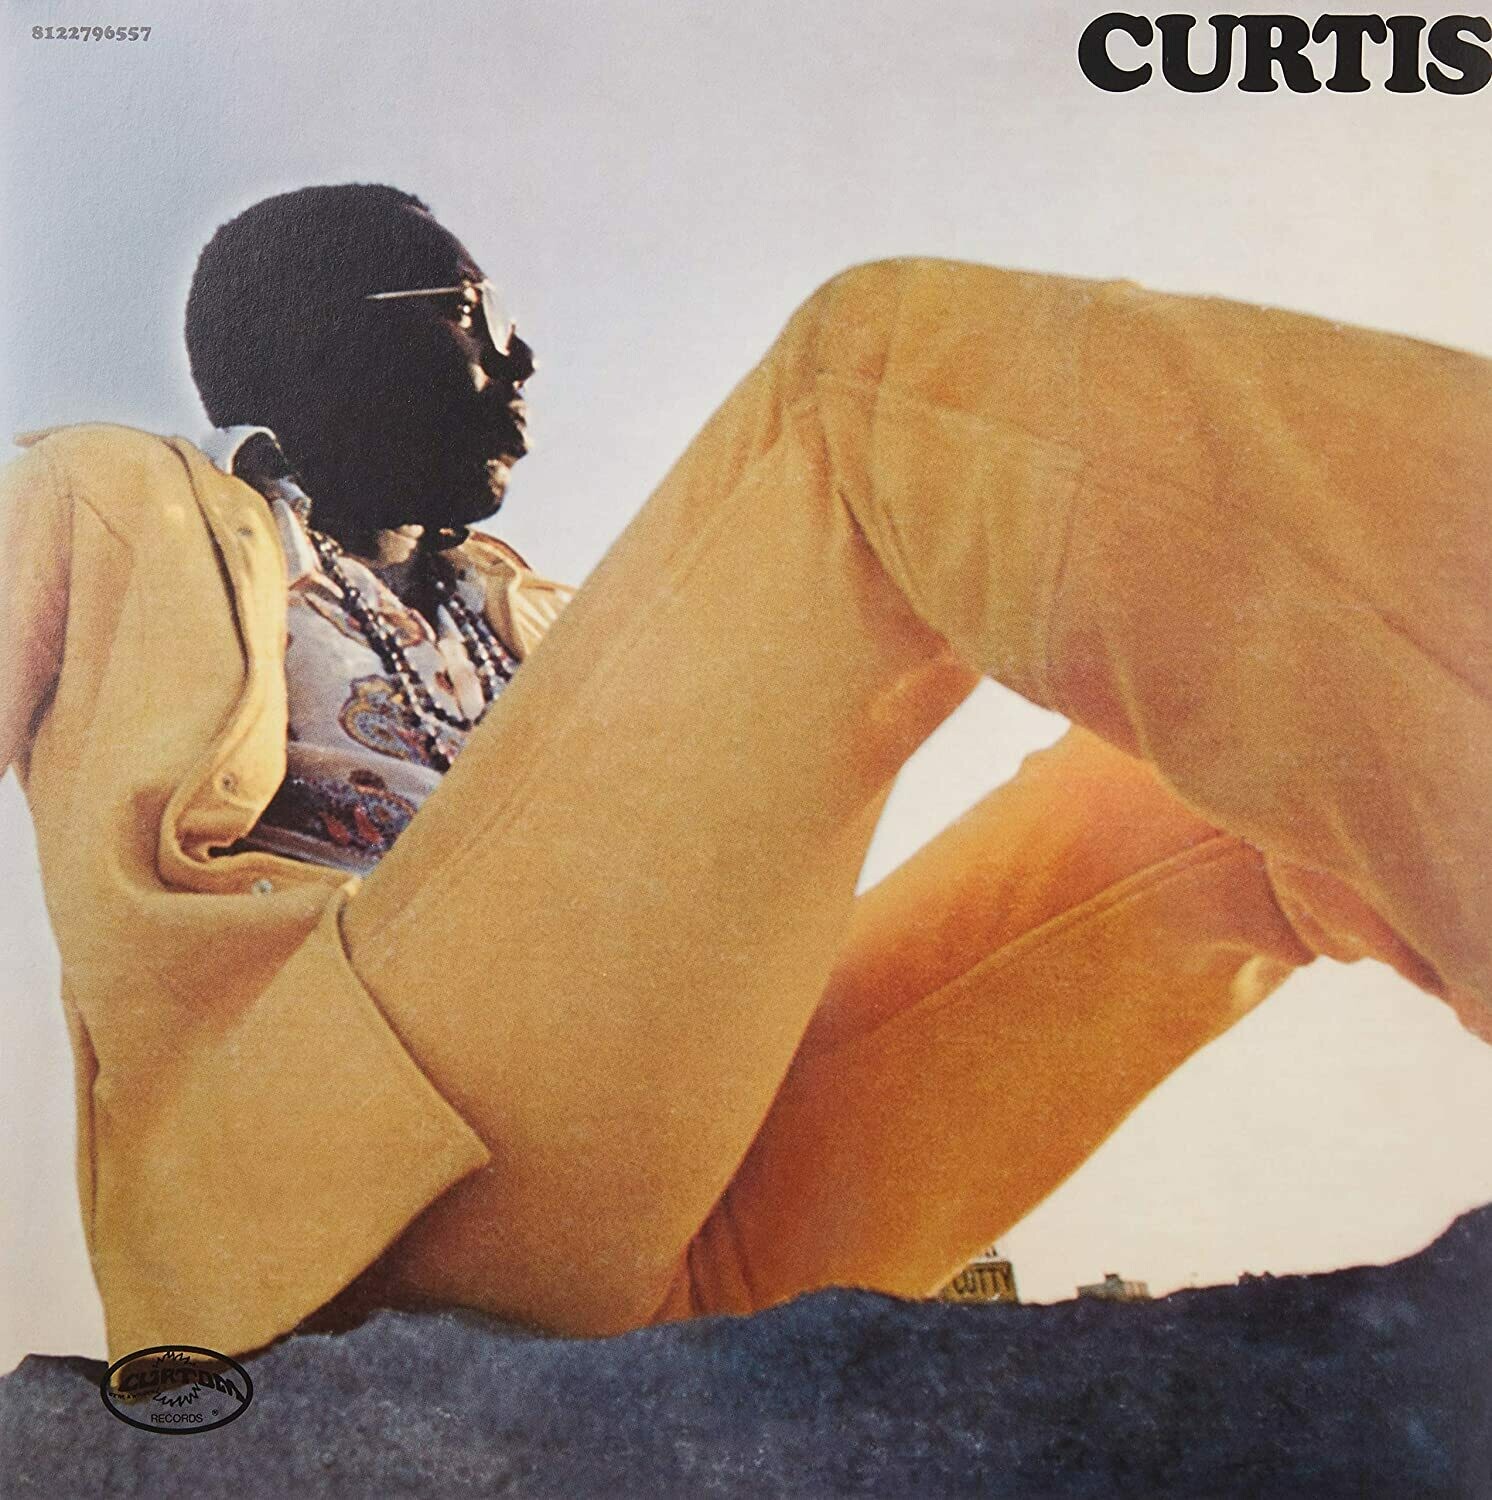 Curtis Mayfield "Curtis"